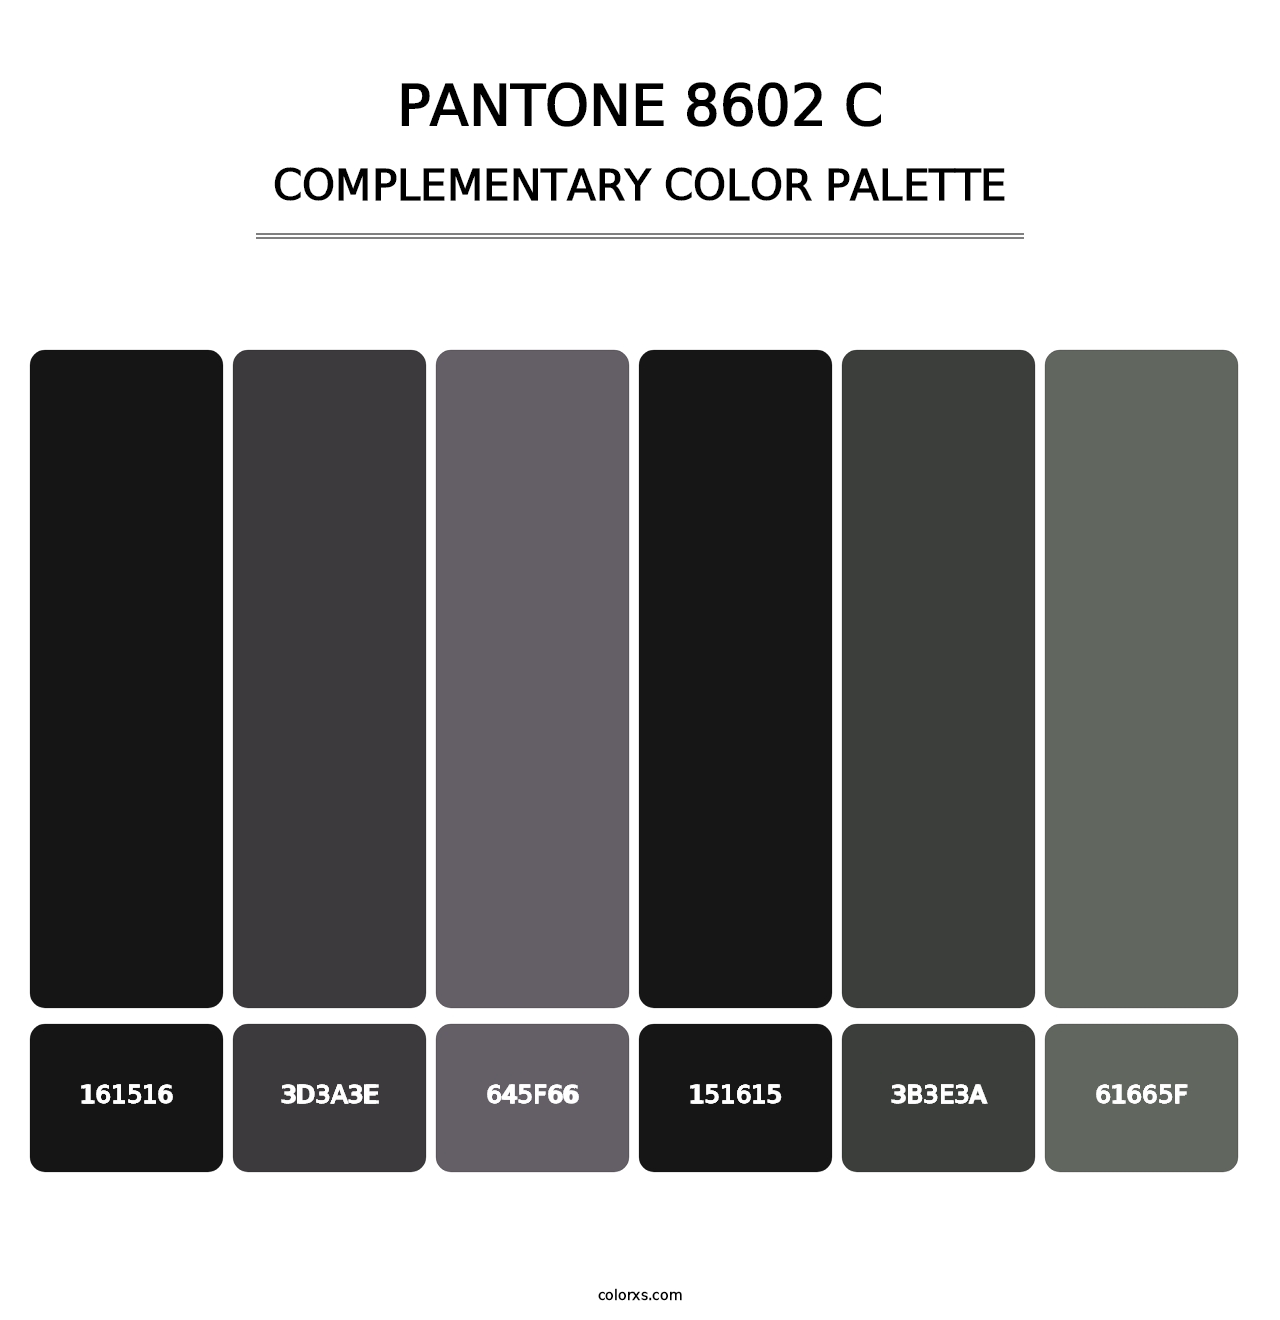 PANTONE 8602 C - Complementary Color Palette